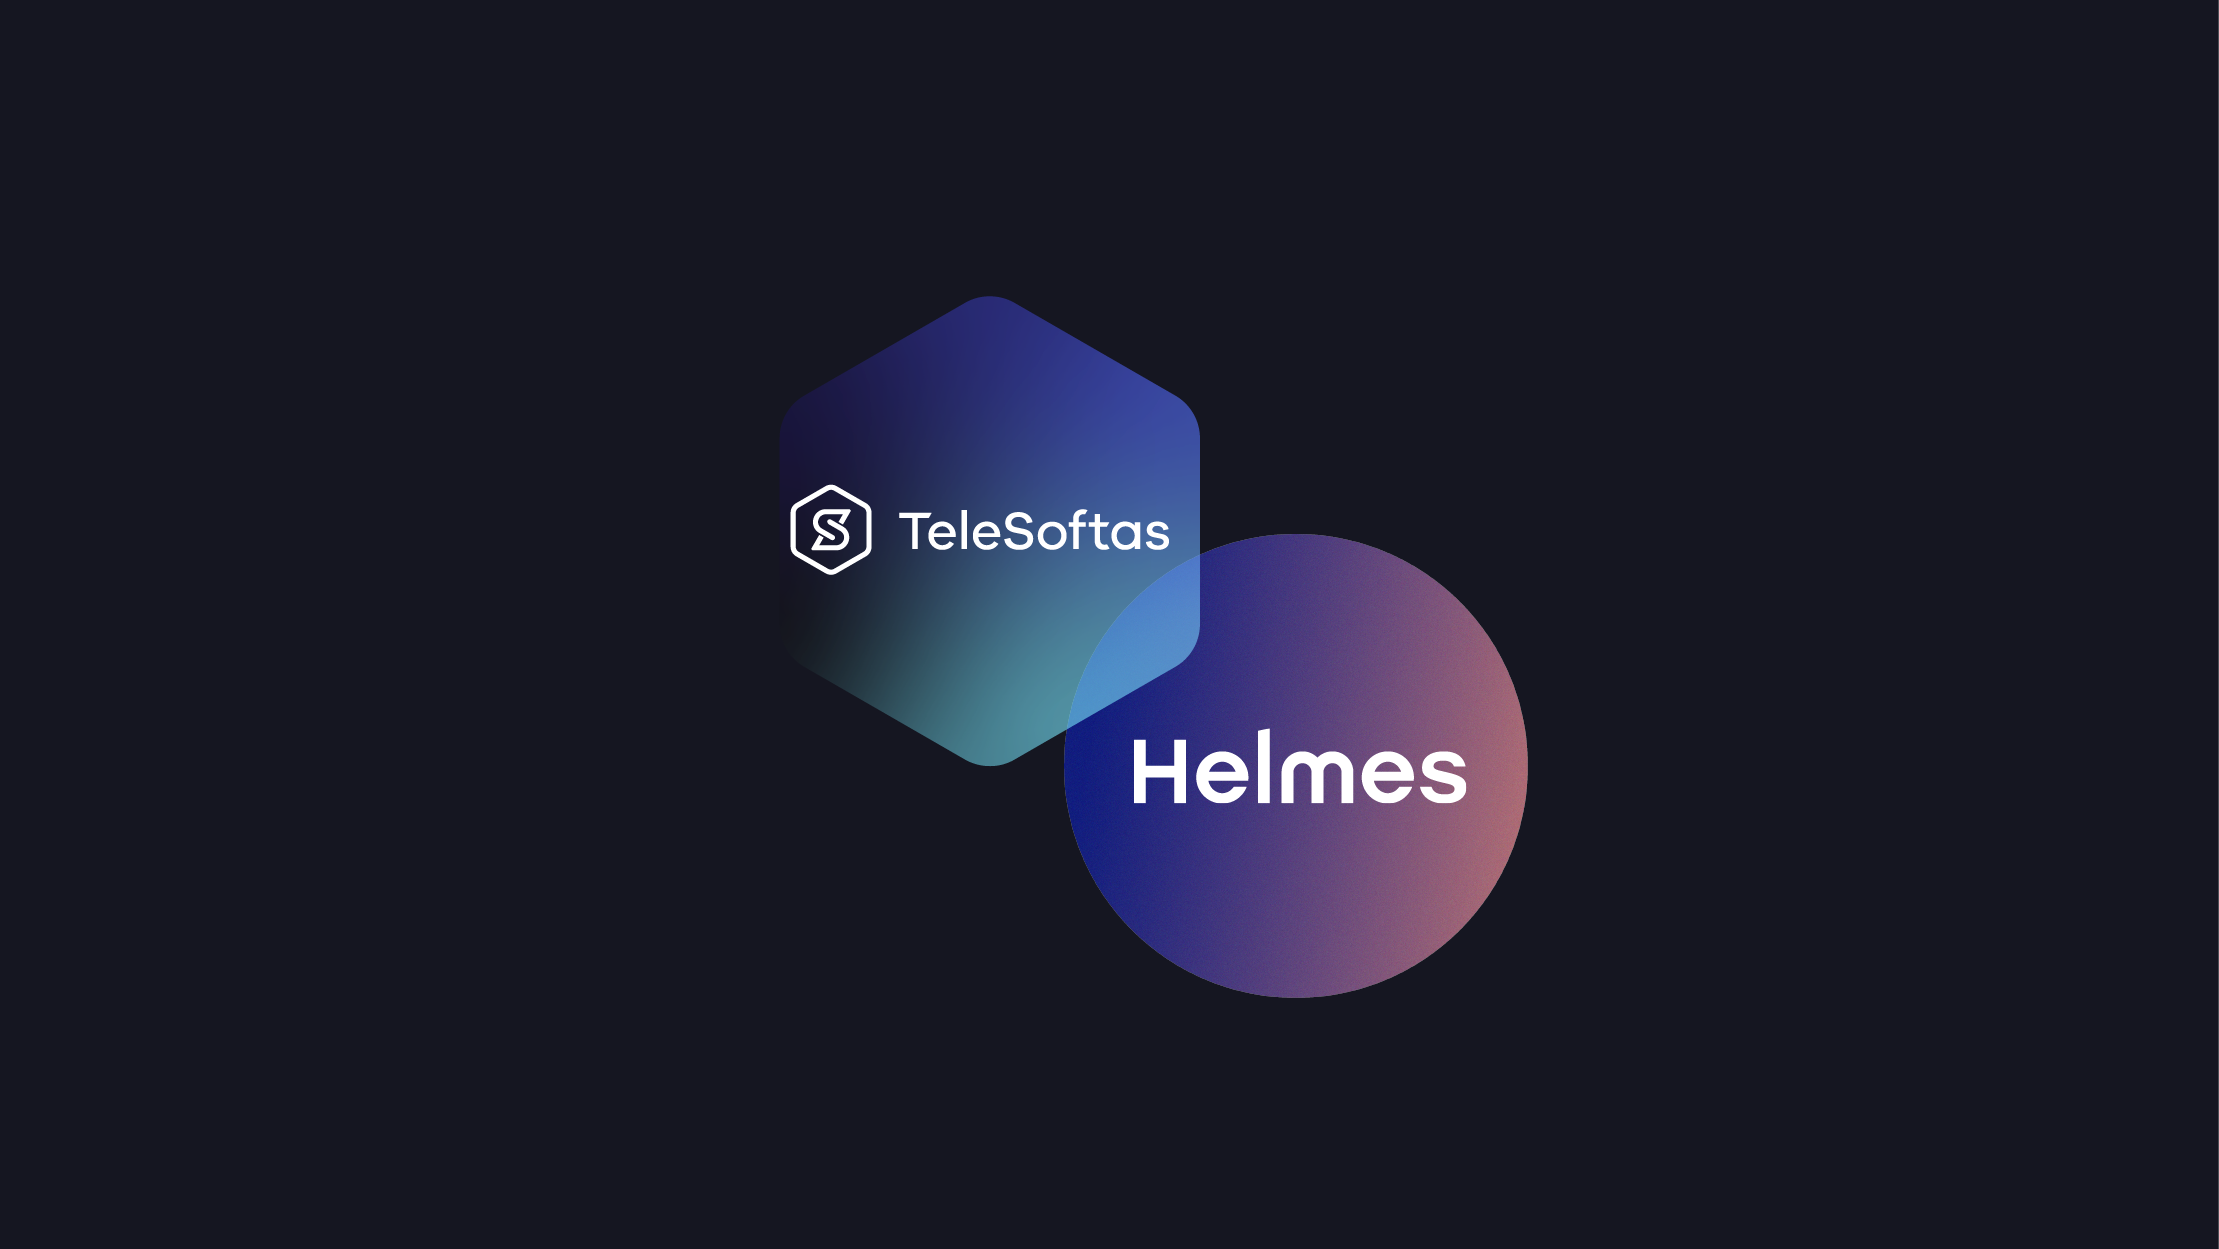 TeleSoftas and Helmes Logos